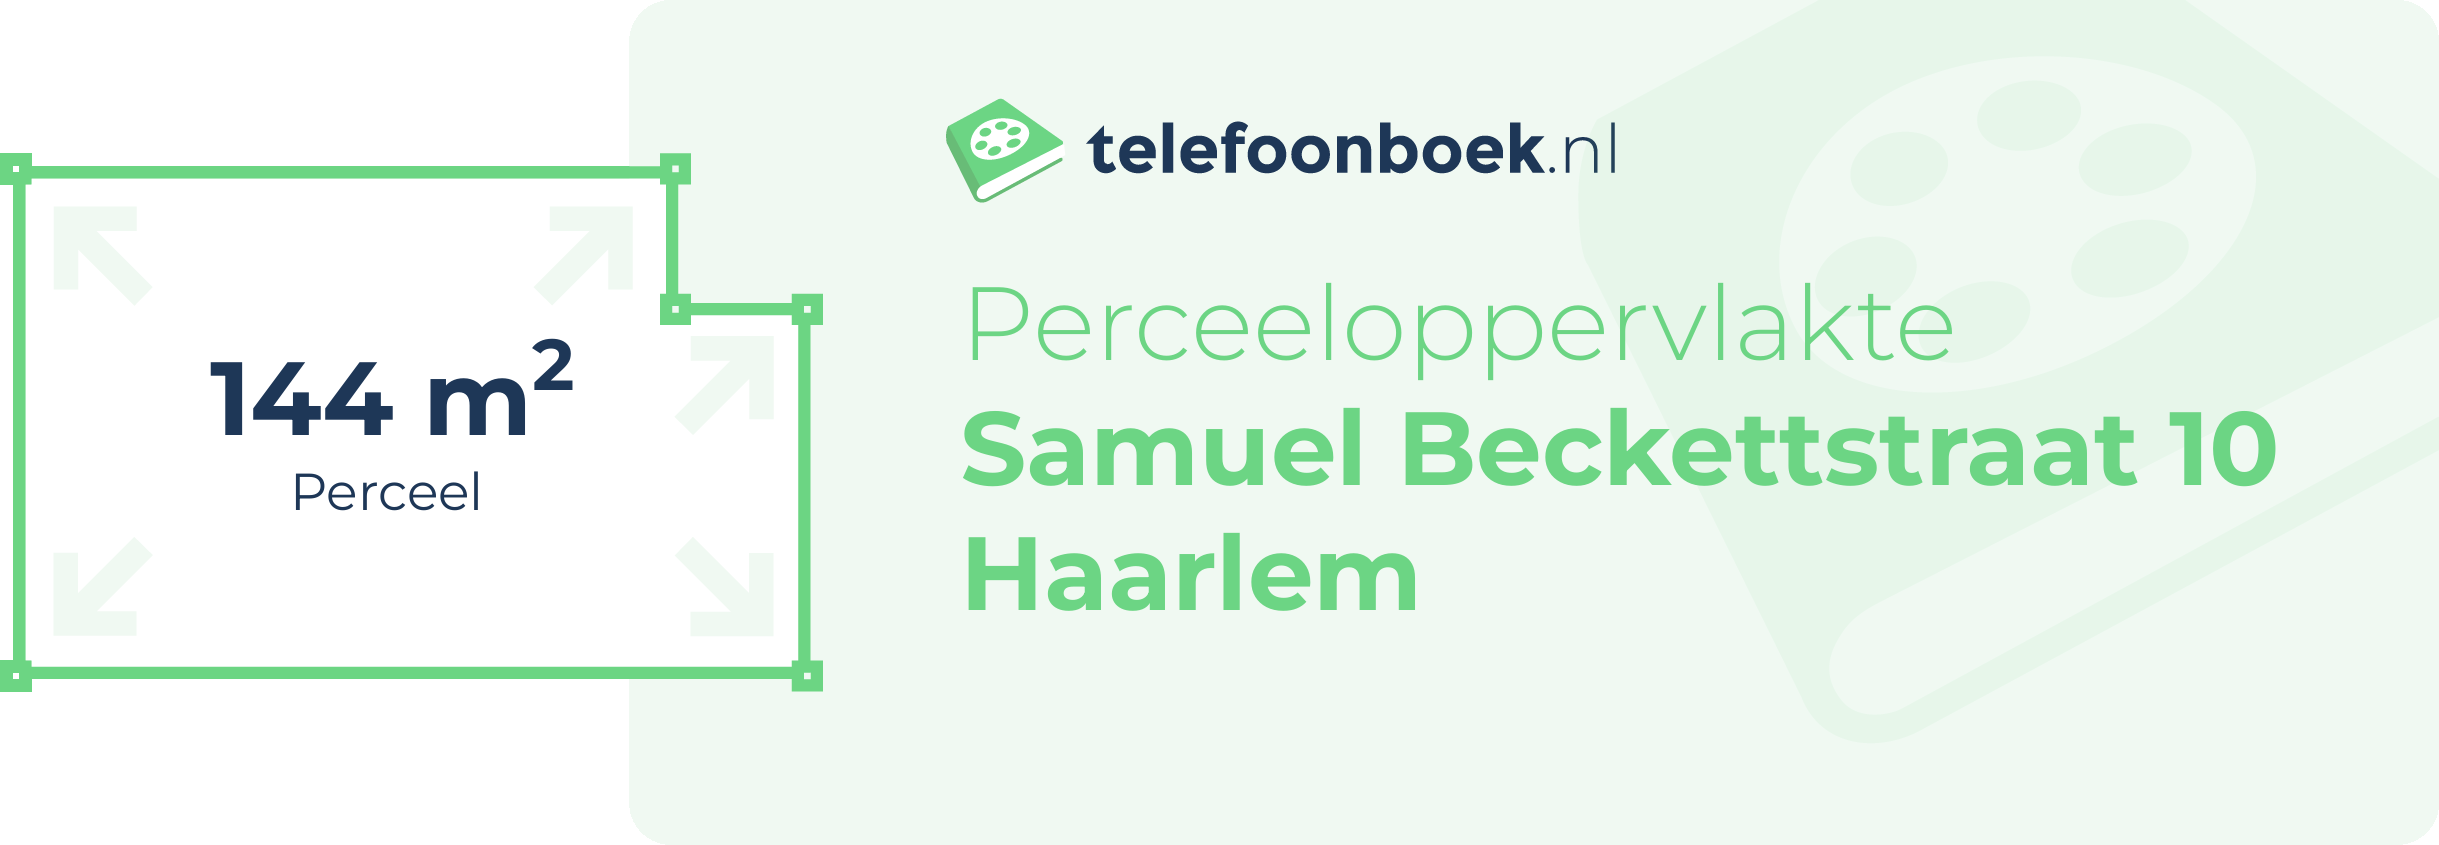 Perceeloppervlakte Samuel Beckettstraat 10 Haarlem